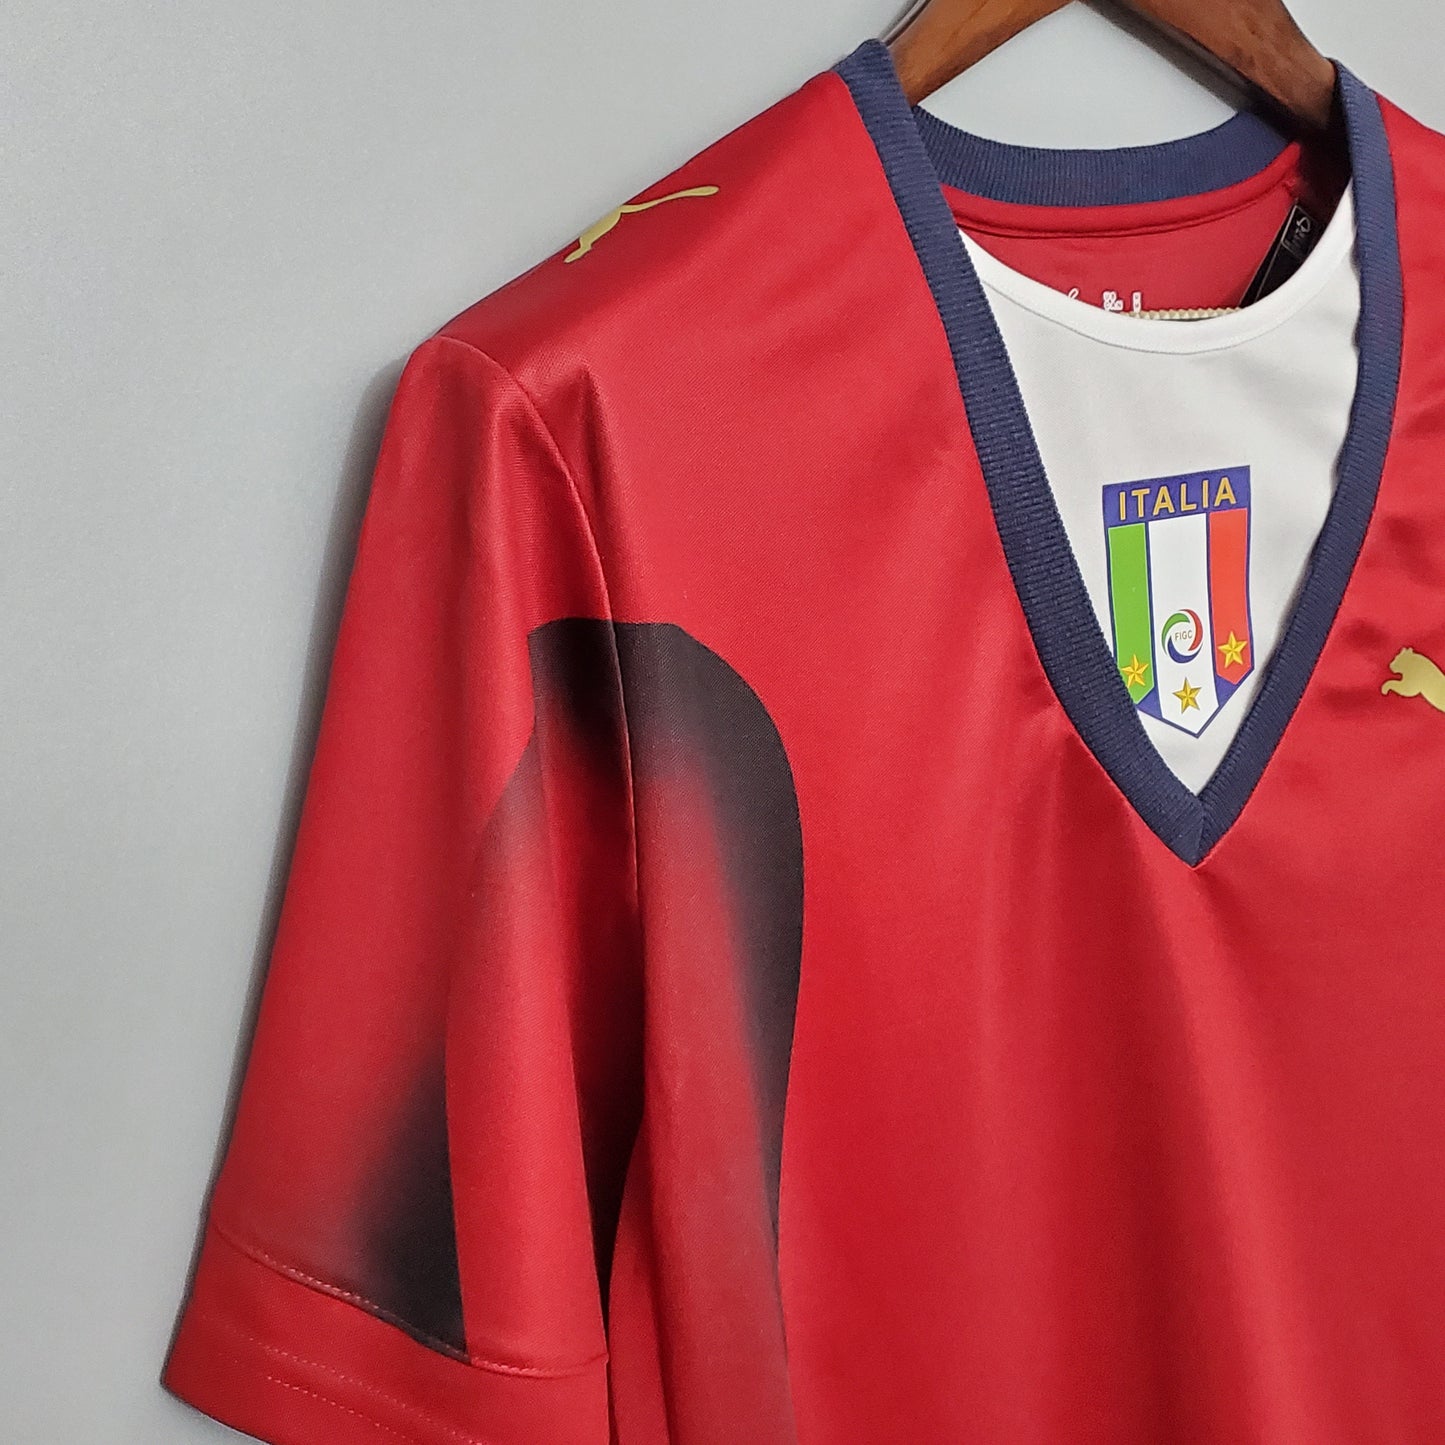 Italy 2006 Goalkeeper Shirt Red